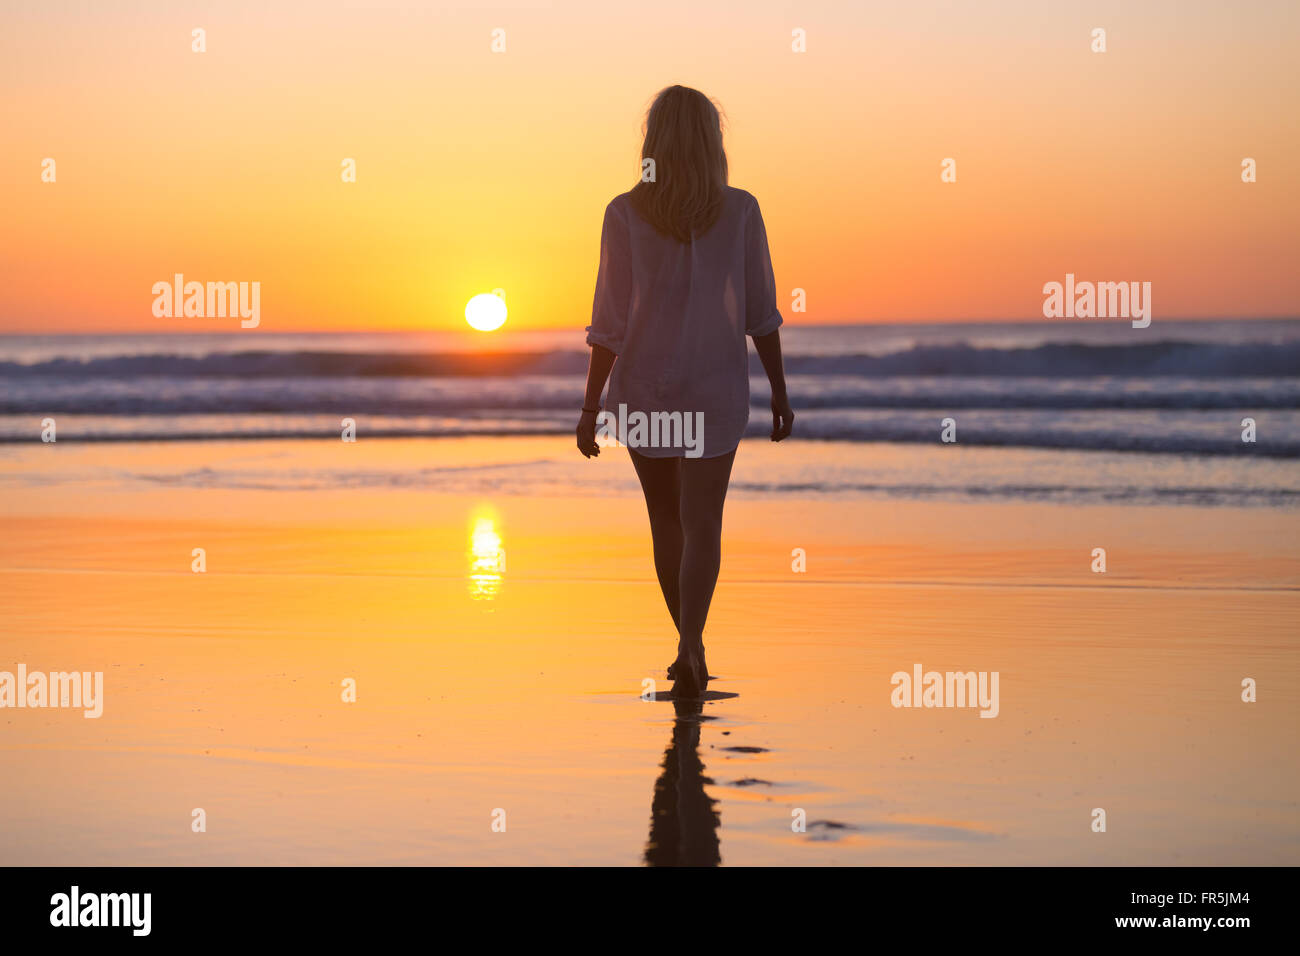 Lady walking on sandy beach in sunset. Stock Photo